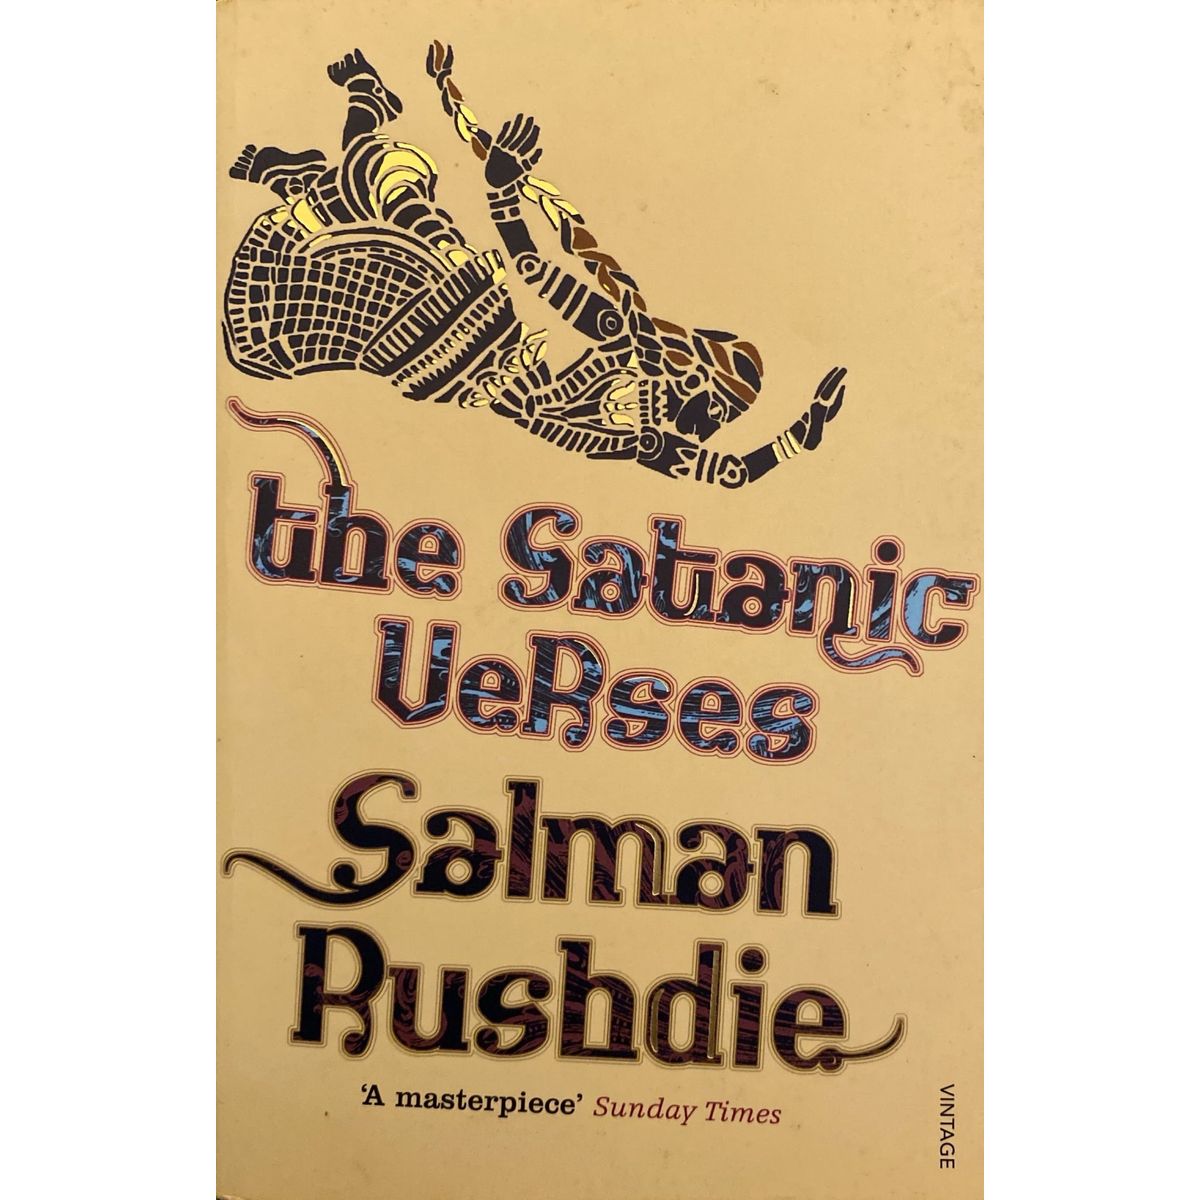 ISBN: 9780963270702 / 0963270702 - The Satanic Verses by Salman Rushdie [2006]